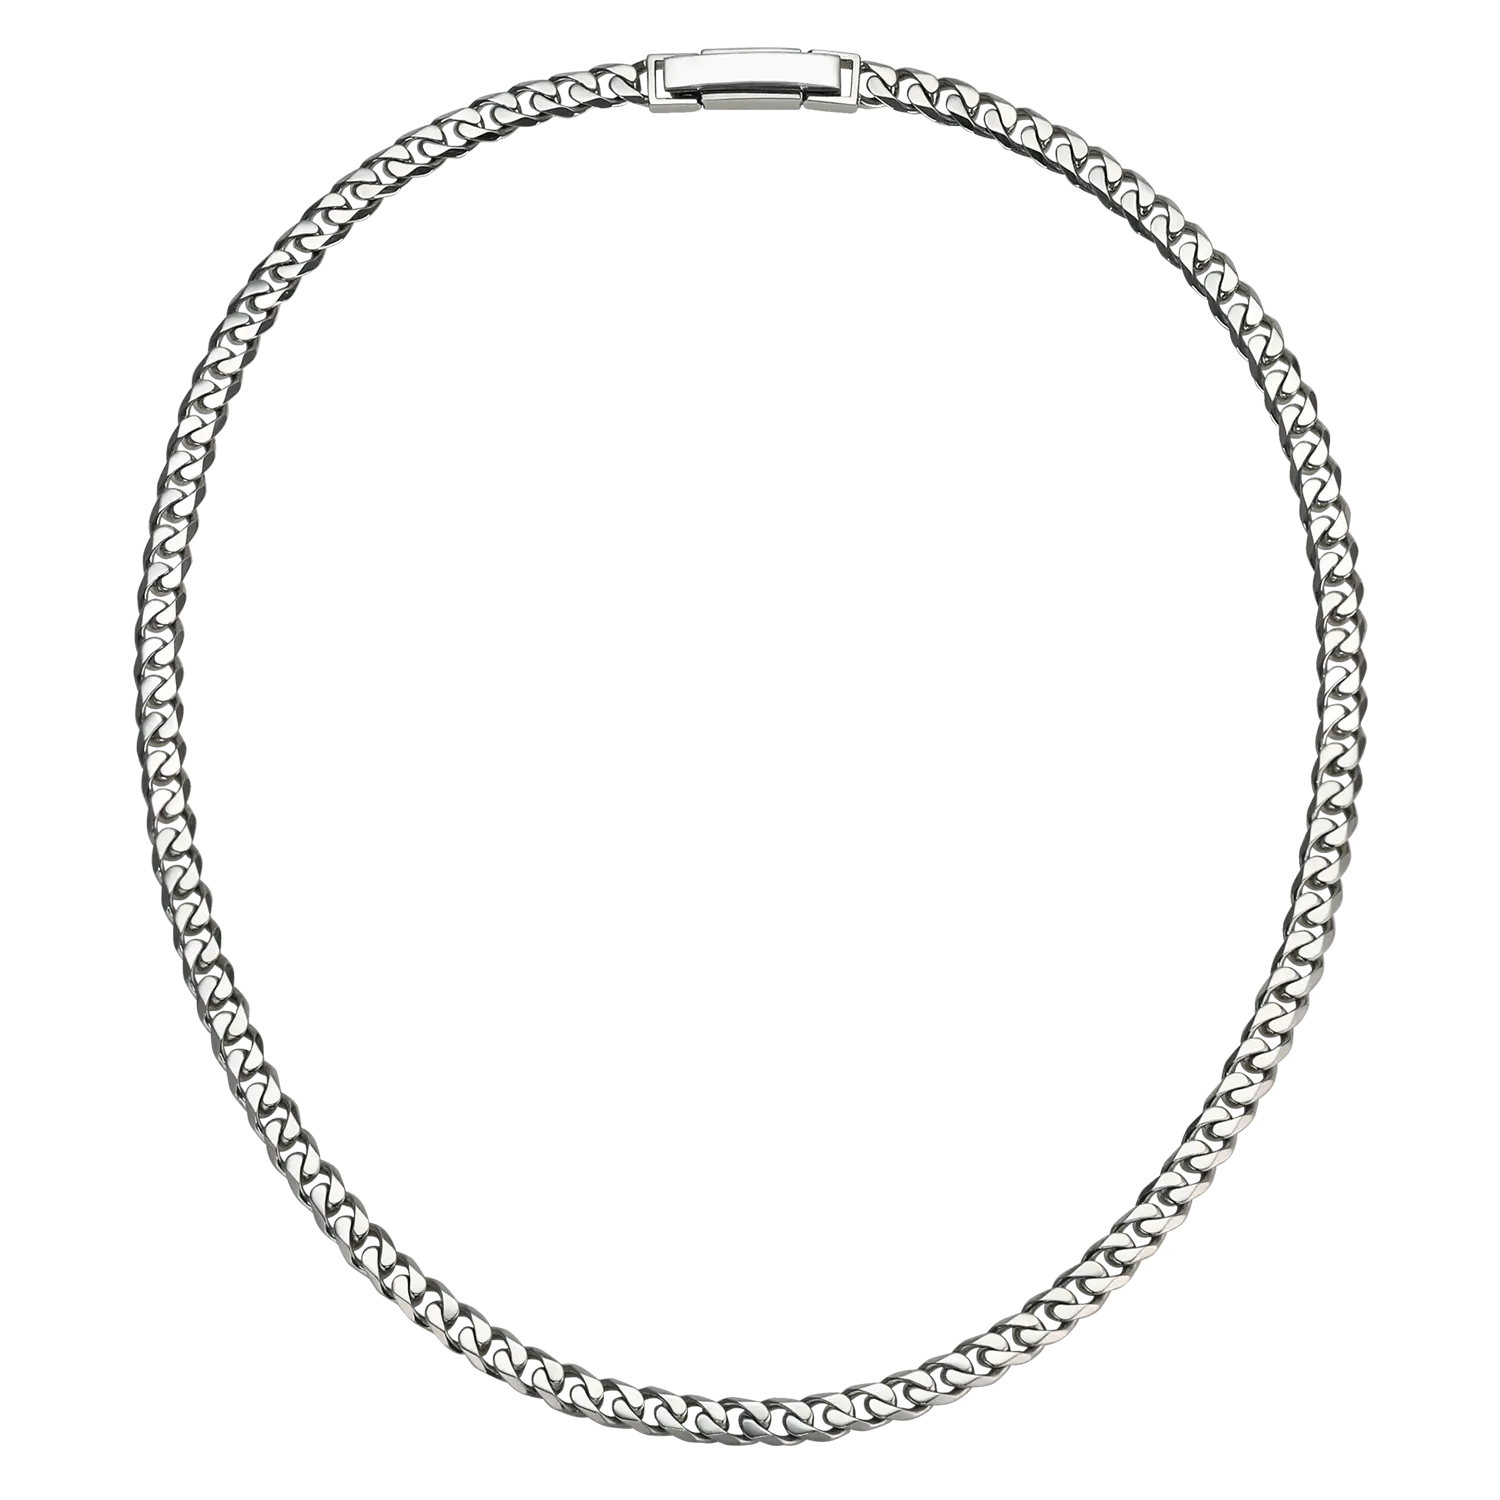 A 6mm men's platinum cuban chain necklace with a durable clasp